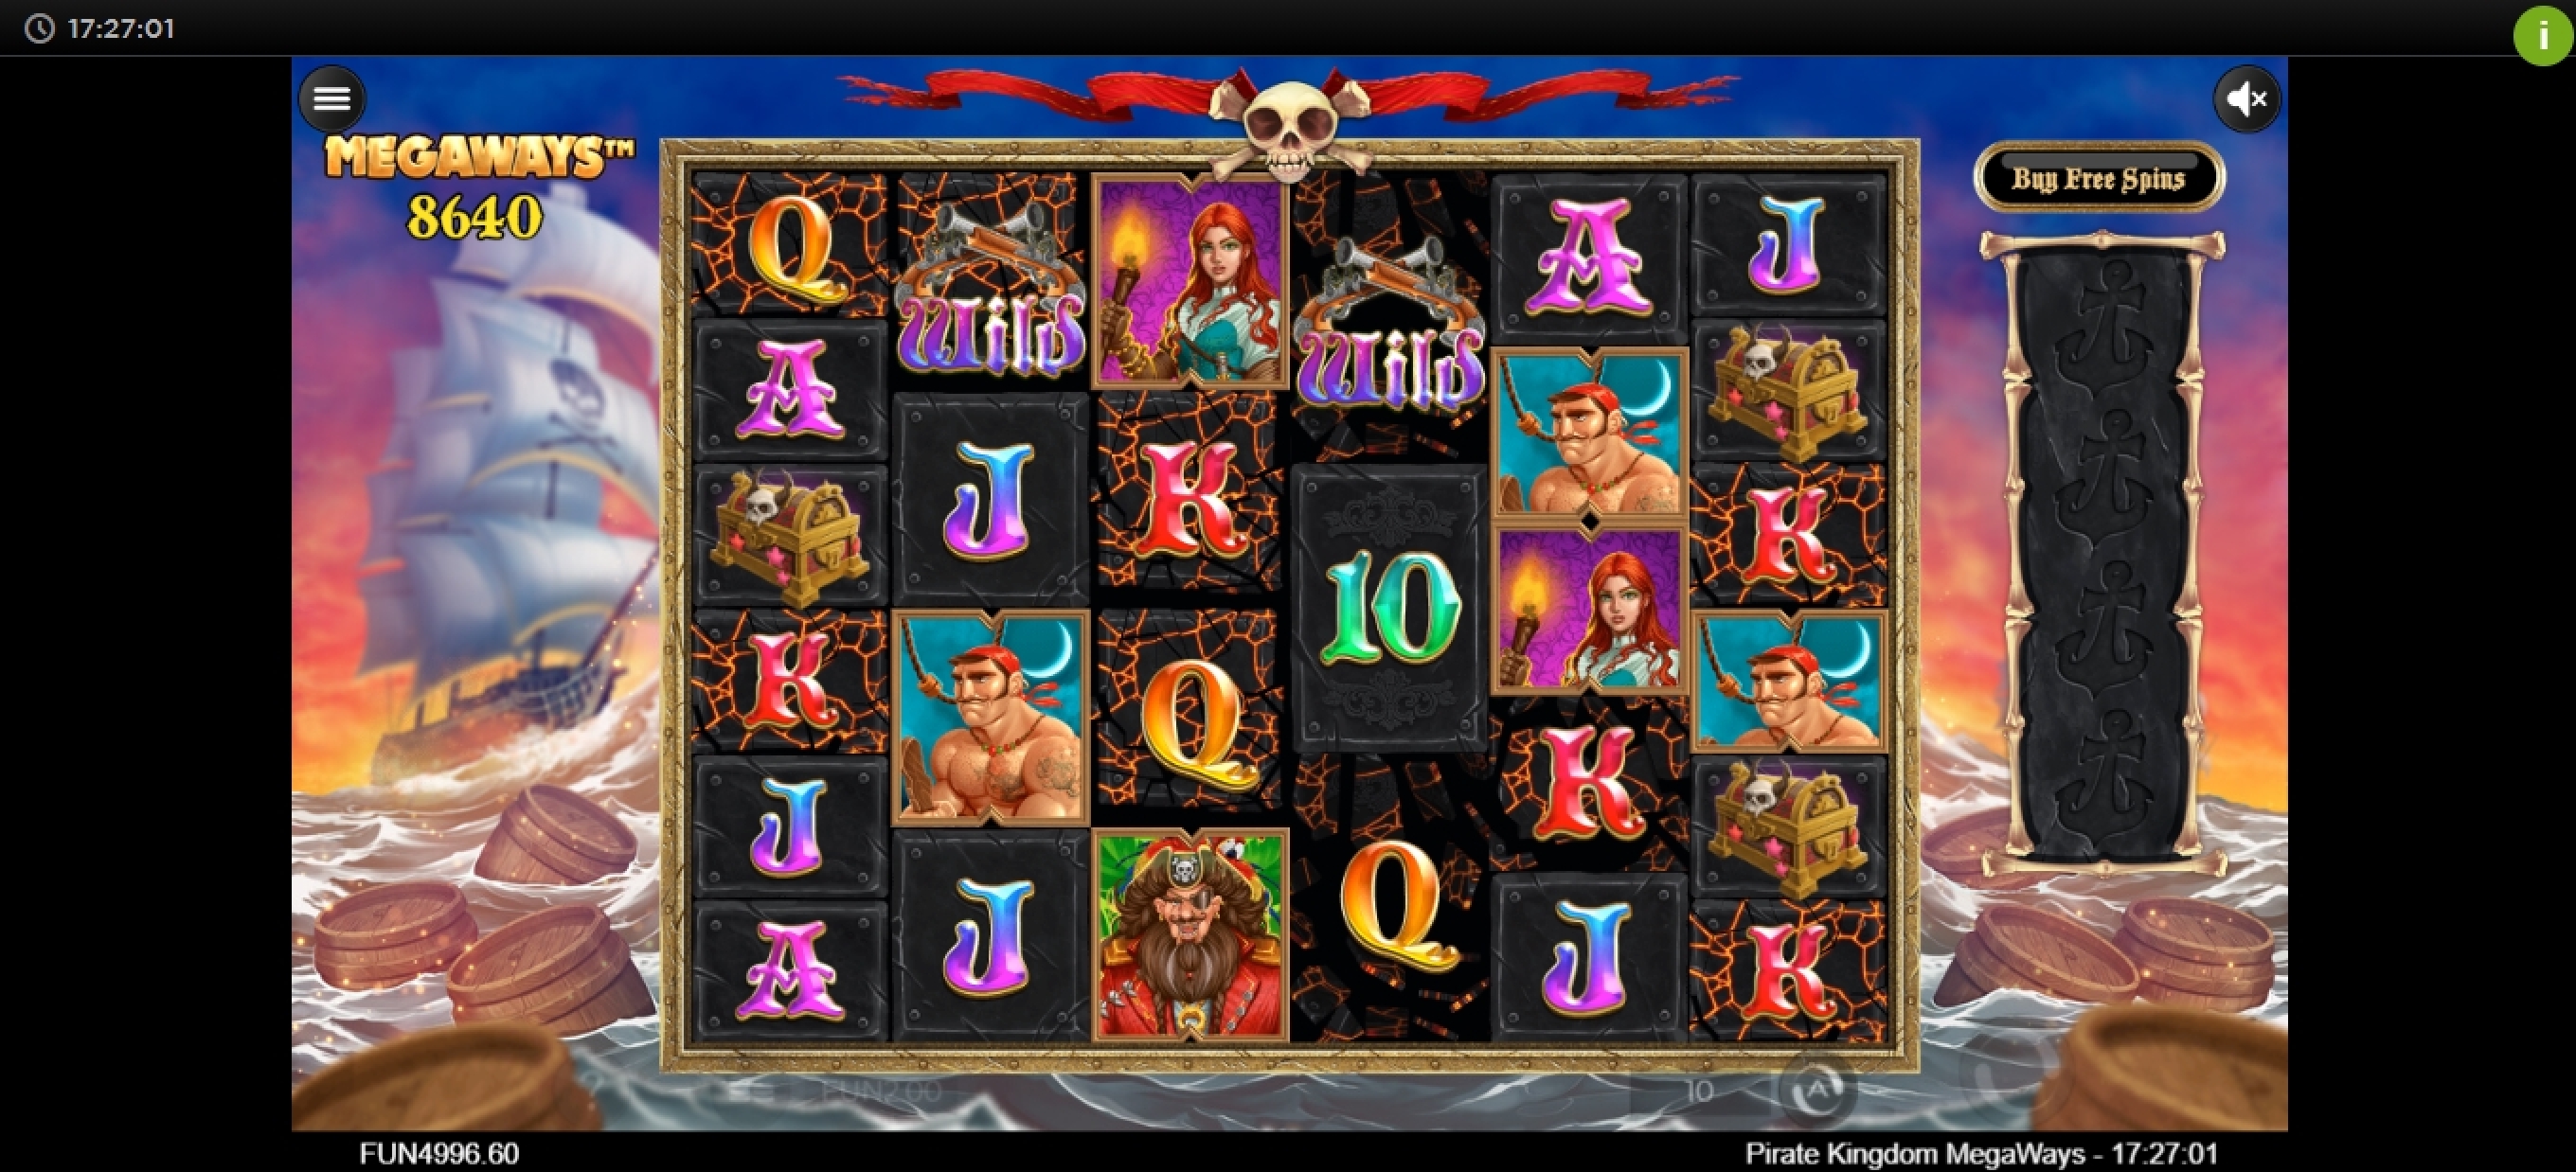 Win Money in Pirate Kingdom Megaways Free Slot Game by Iron Dog Studios